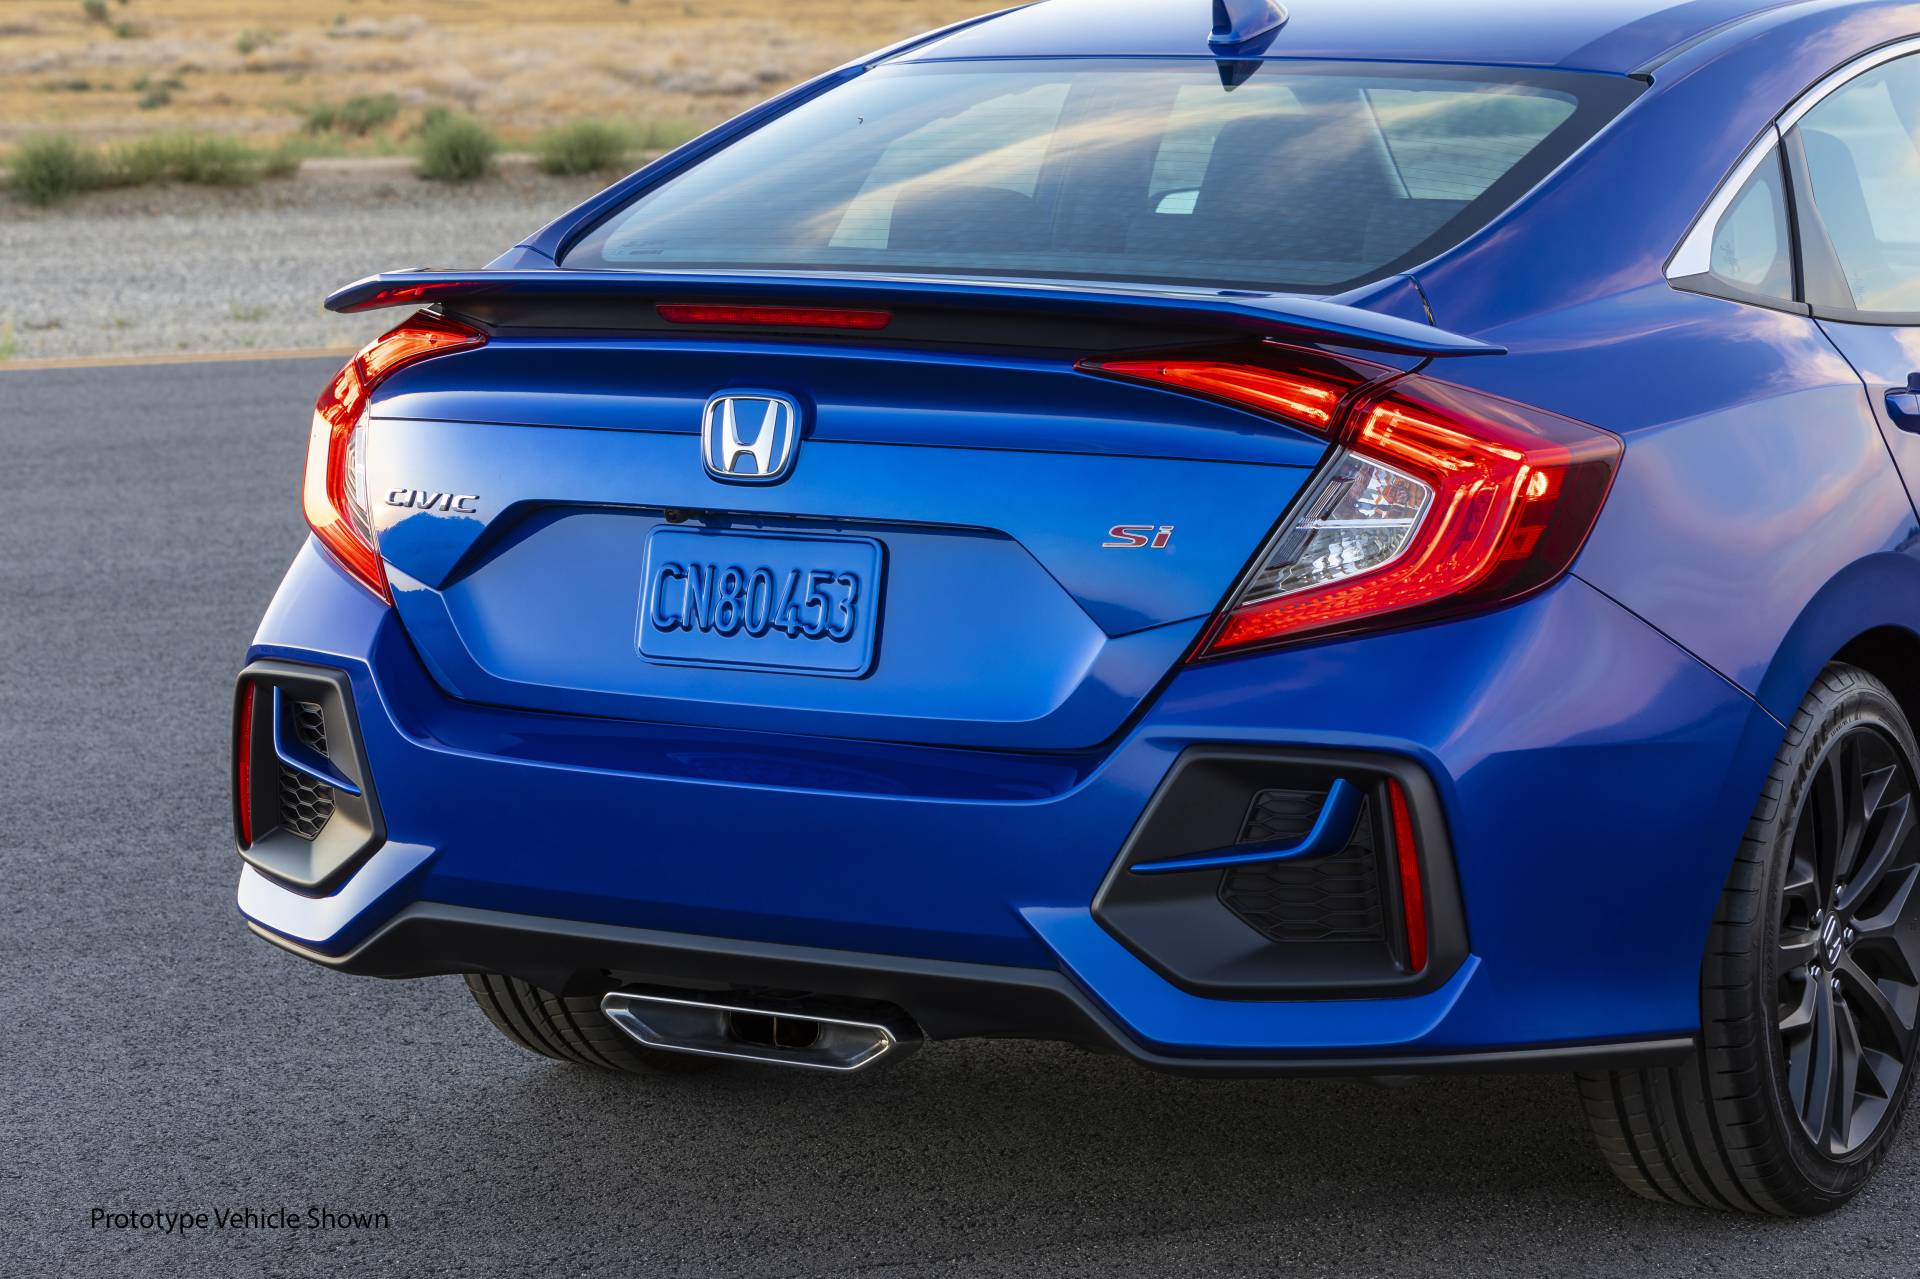 Honda Updates Civic Si For 2020 Model Year, Raises Up ...